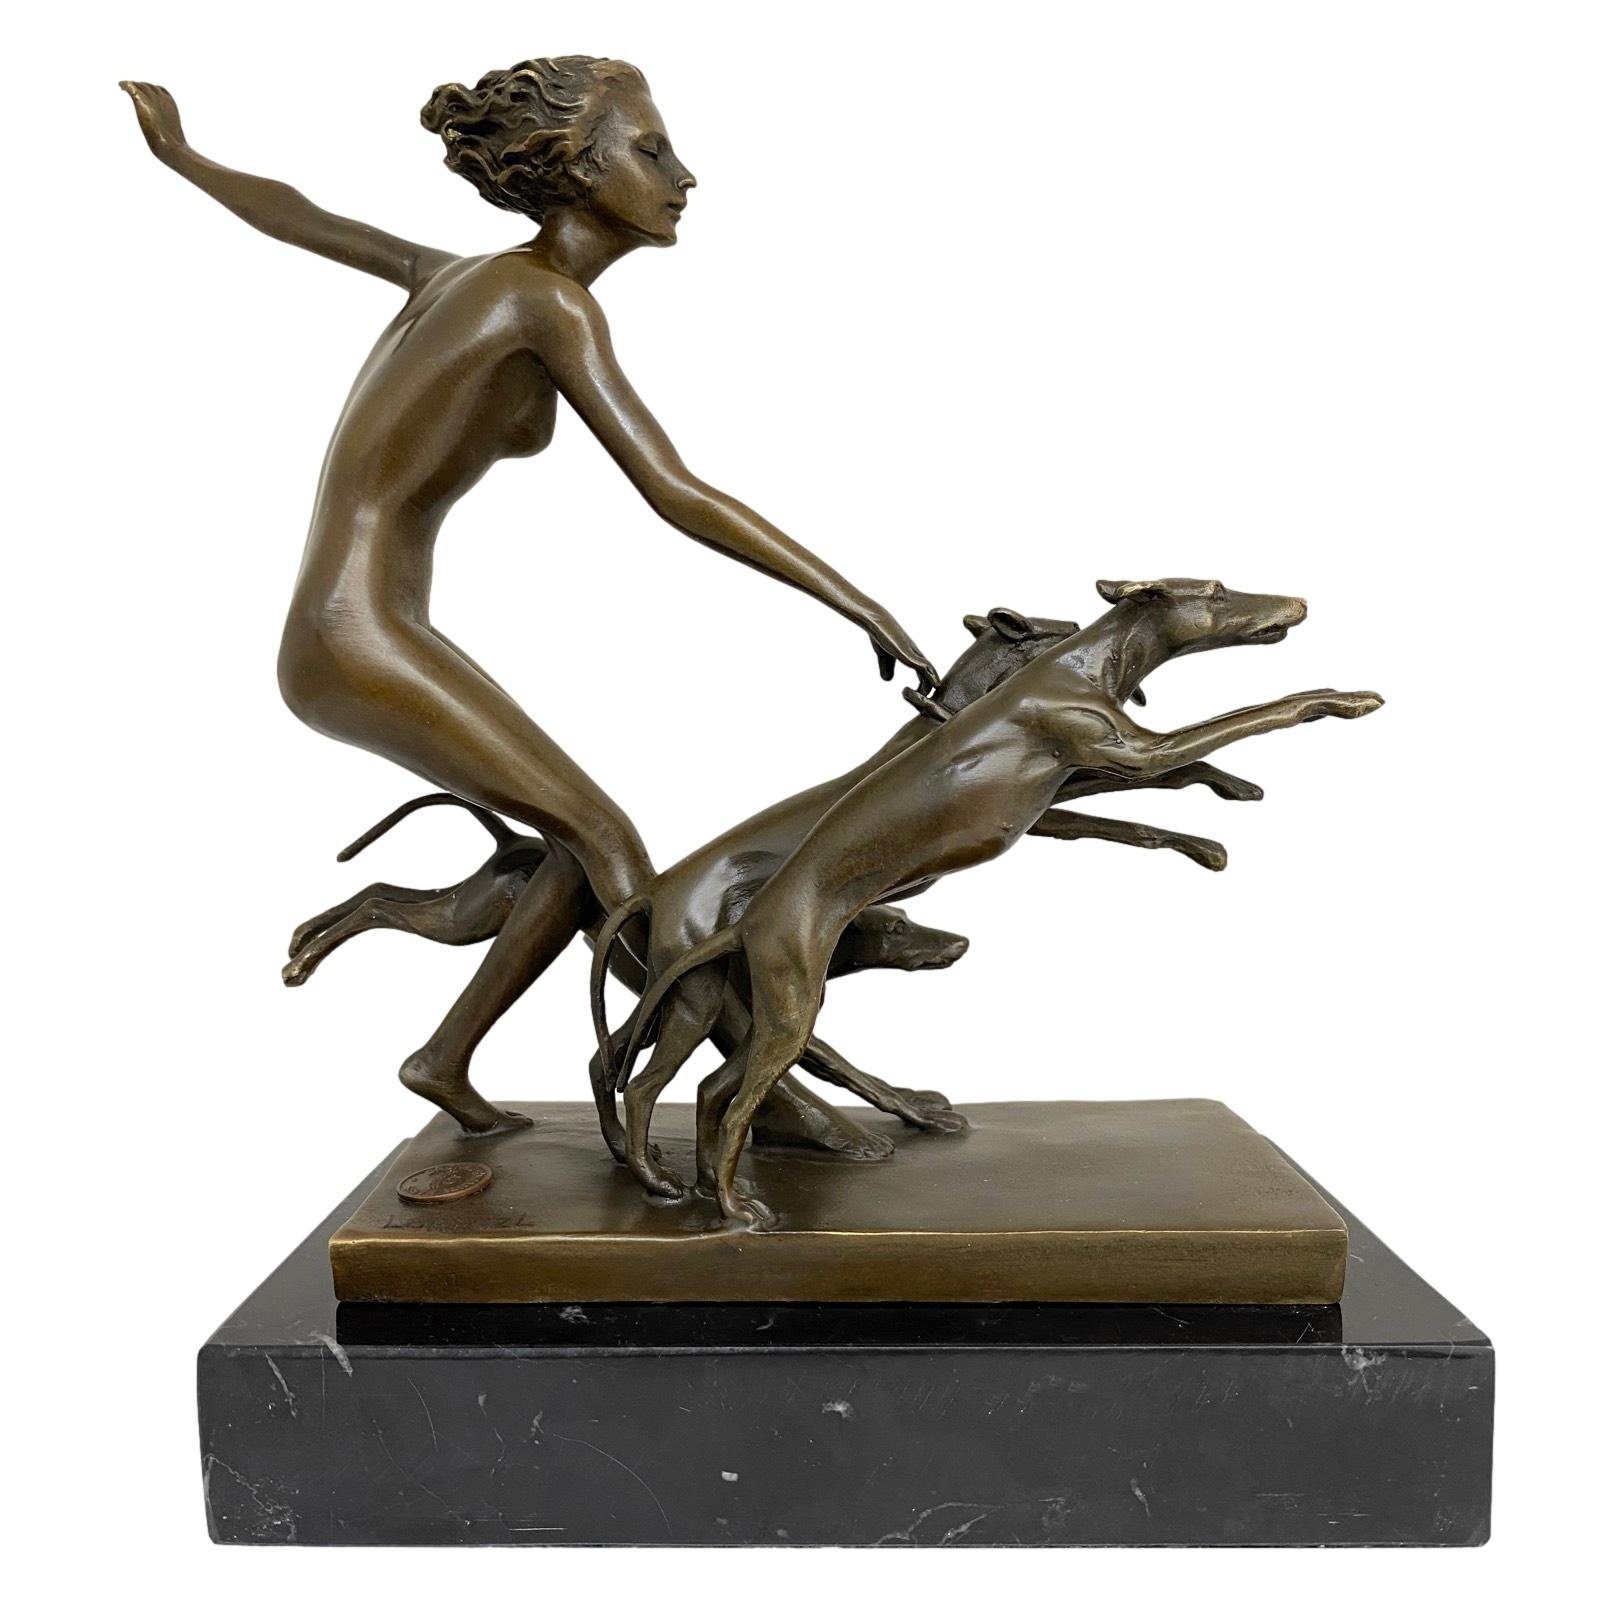 Aubaho Skulptur Bronzeskulptur Figur Göttin Diana Hund nach Lorenzl Antik-Stil Replik